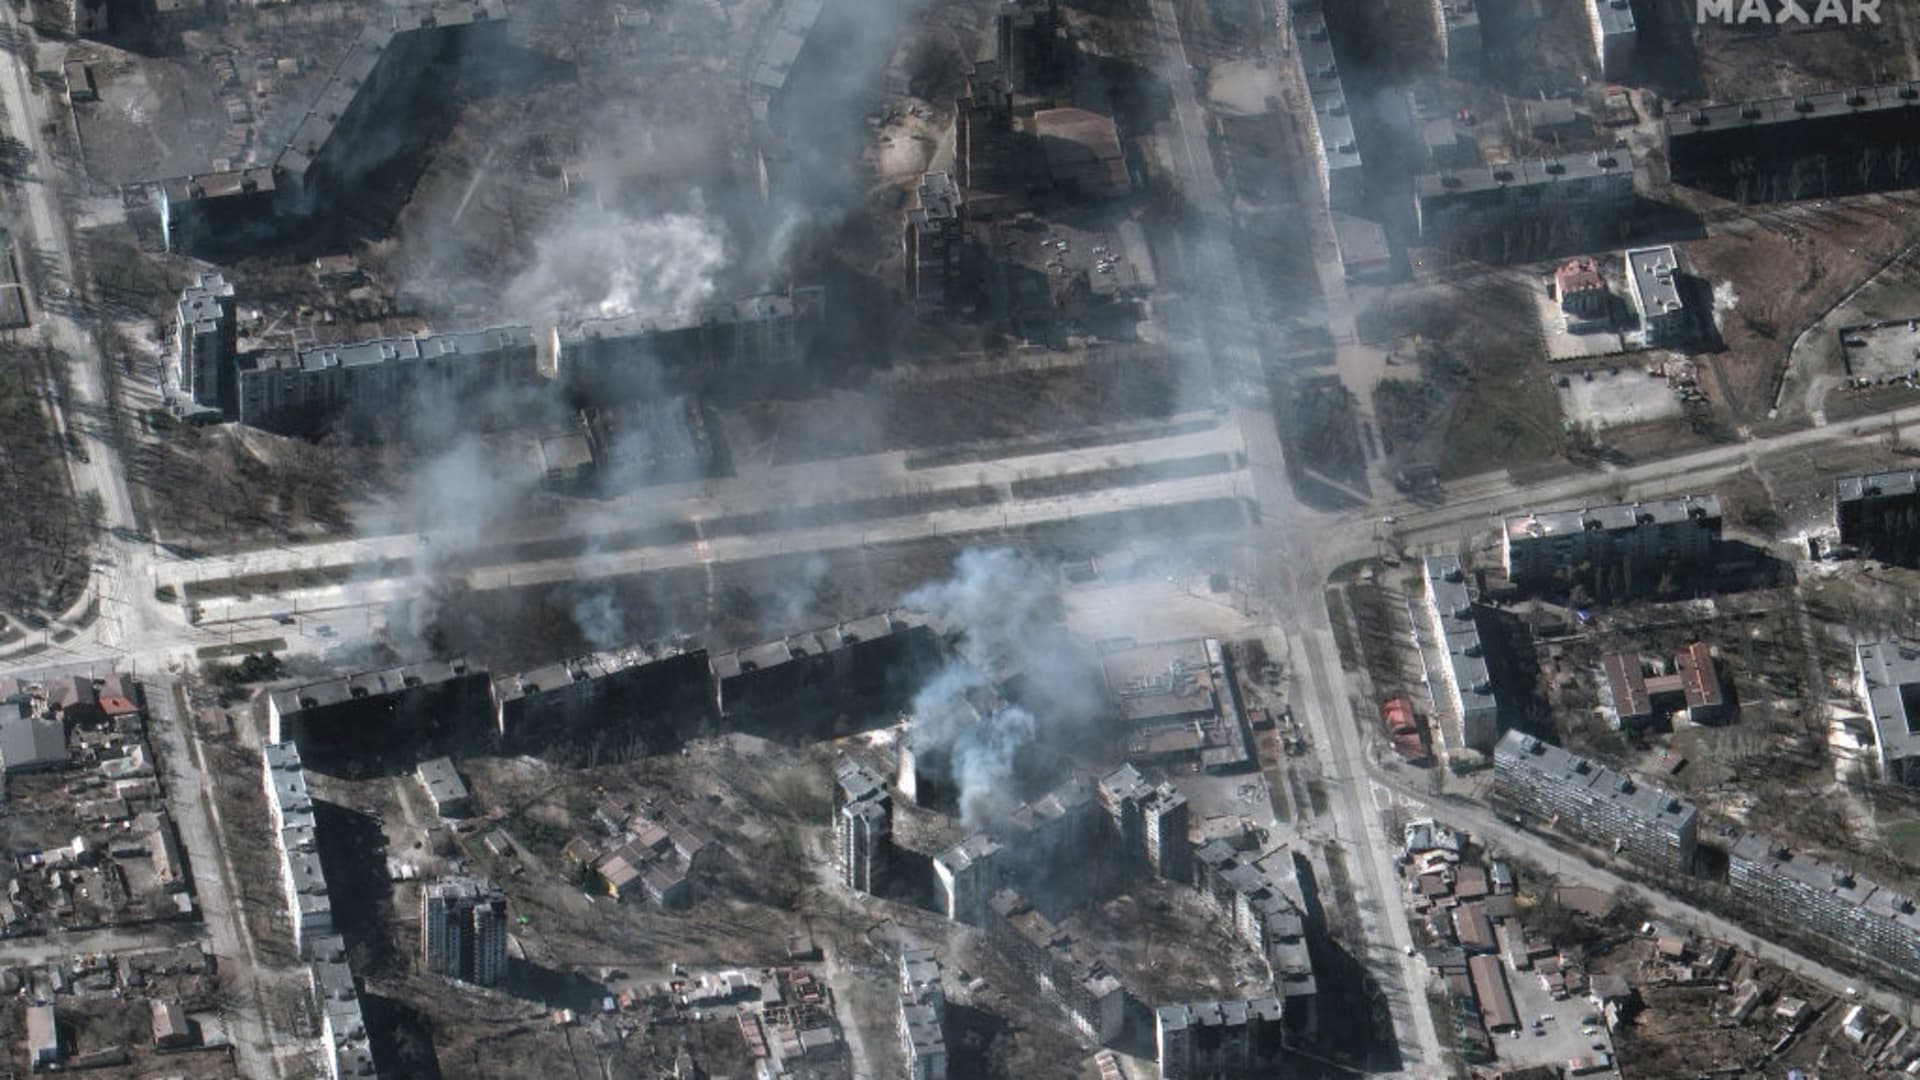 Maxar satellite image of additional burning residential apartment buildings in Mariupol, Ukraine.